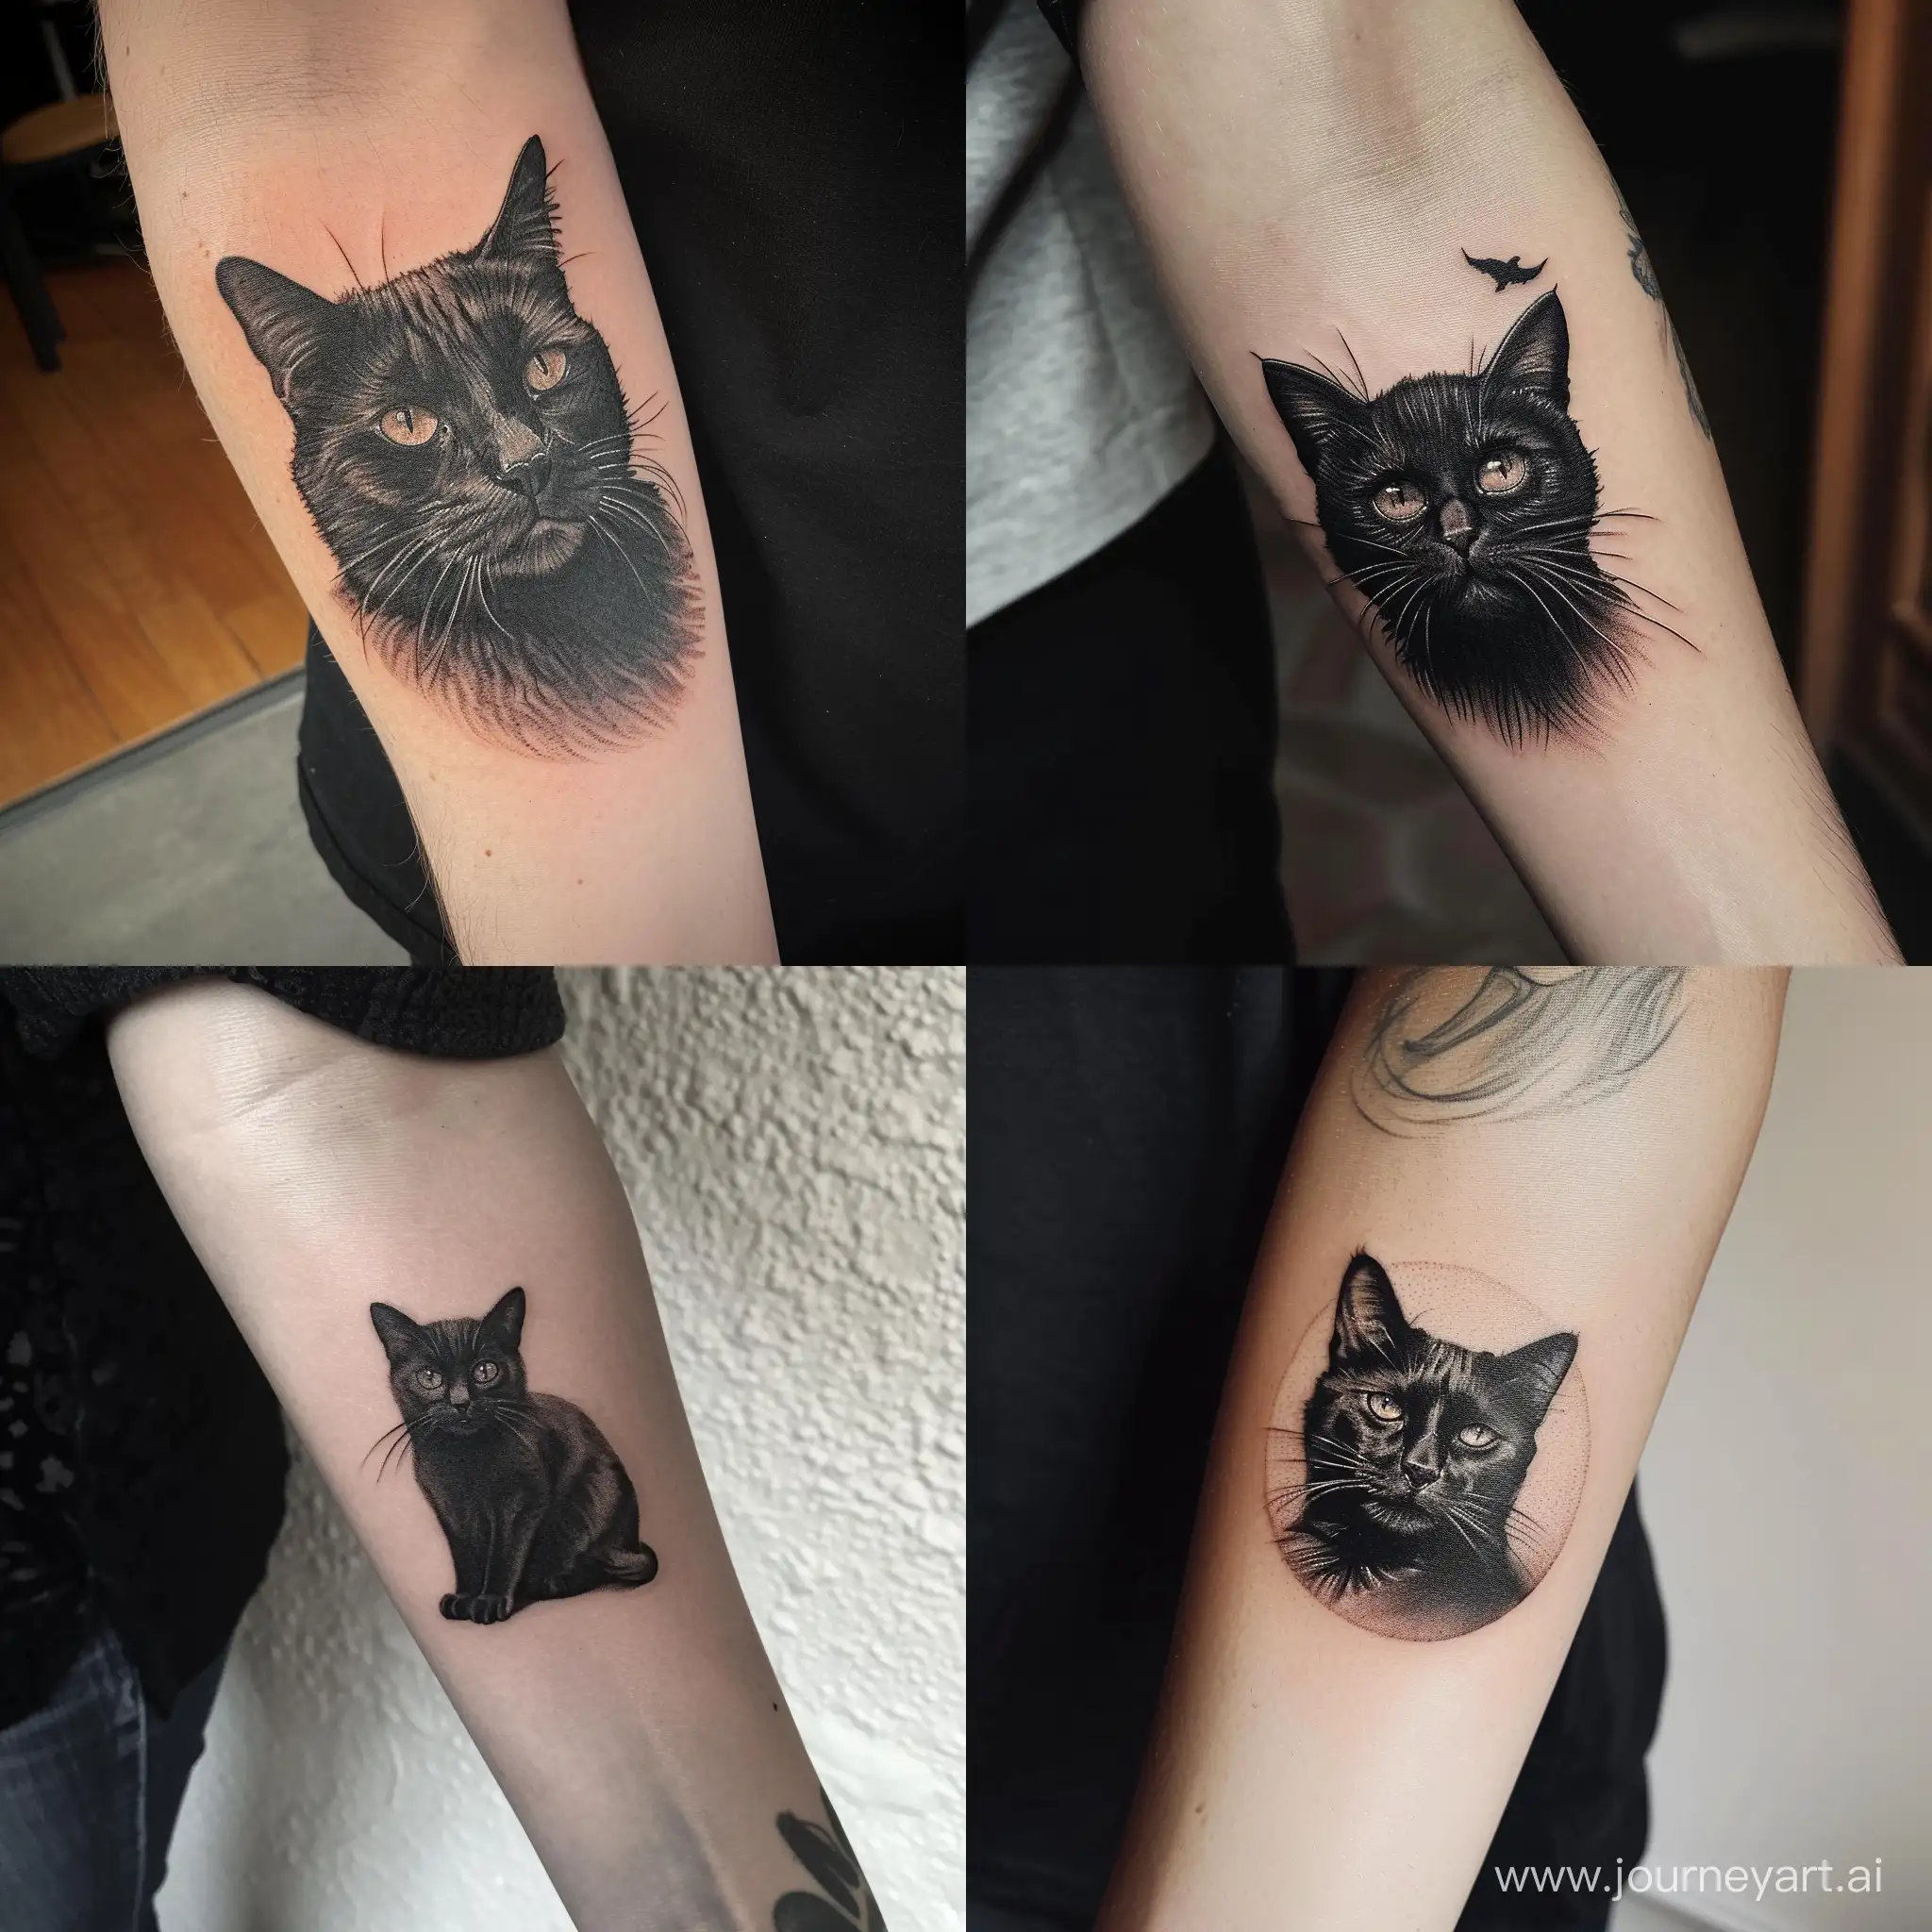 Hyperrealistic-Black-Cat-Tattoo-in-VIP-Shading-Style